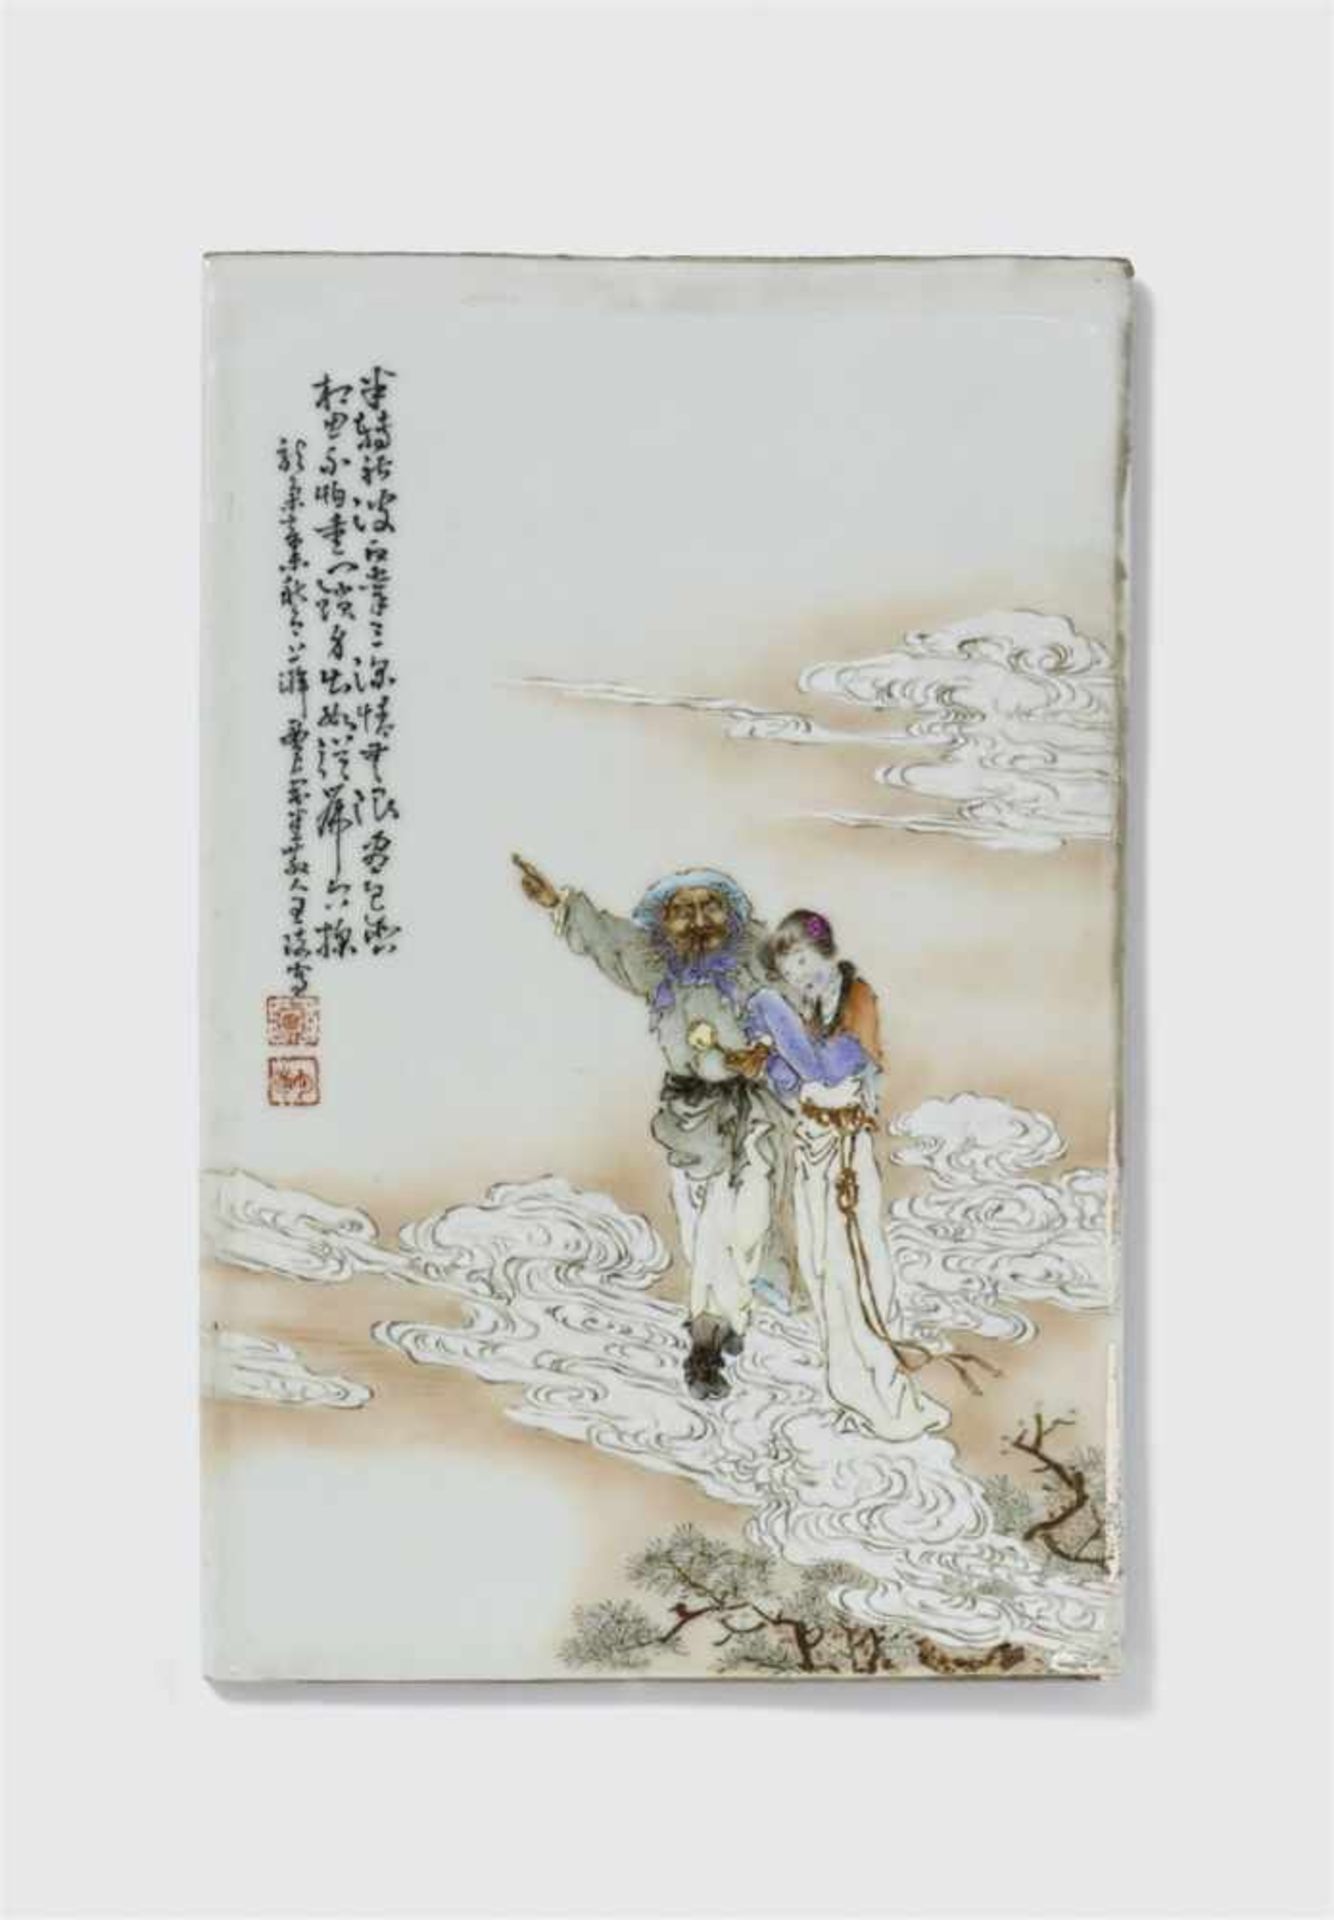 Fencai-Porzellanplatte mit Zhong Kui. Datiert 1931Hochrechteckige Platte, dekoriert in polychromer